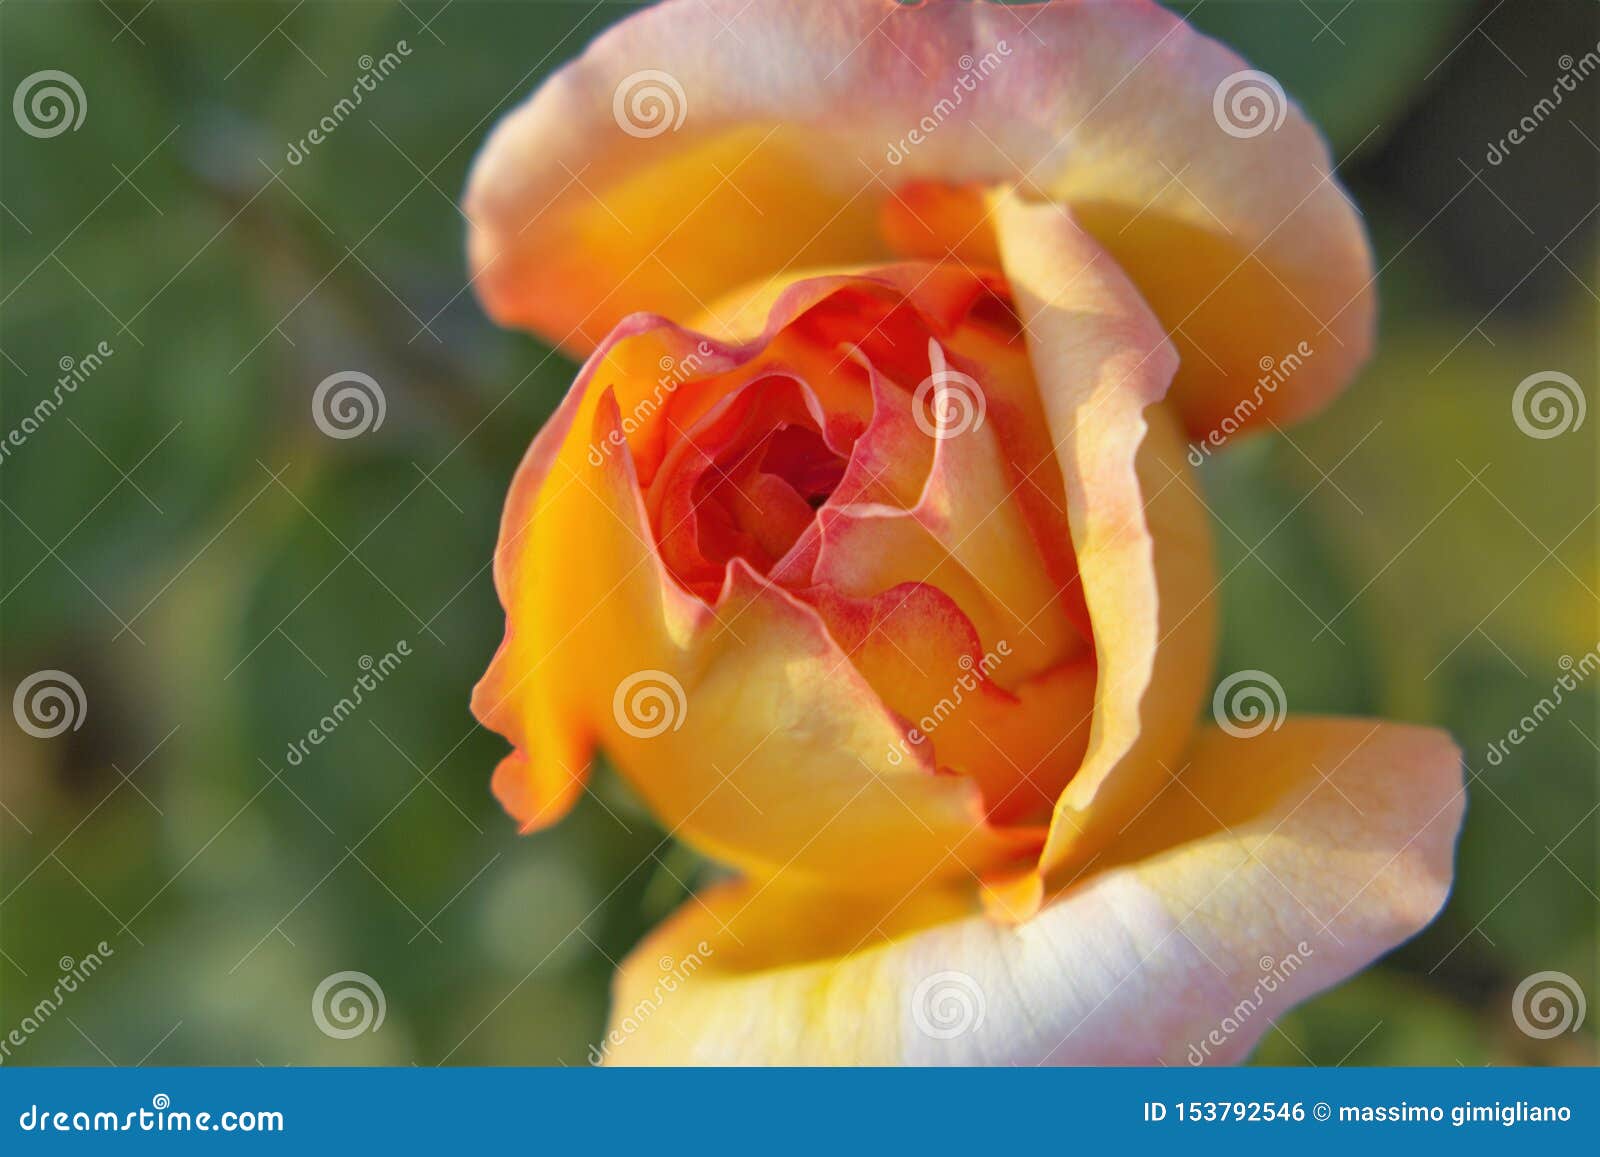 rose flower pinkrose macro piante